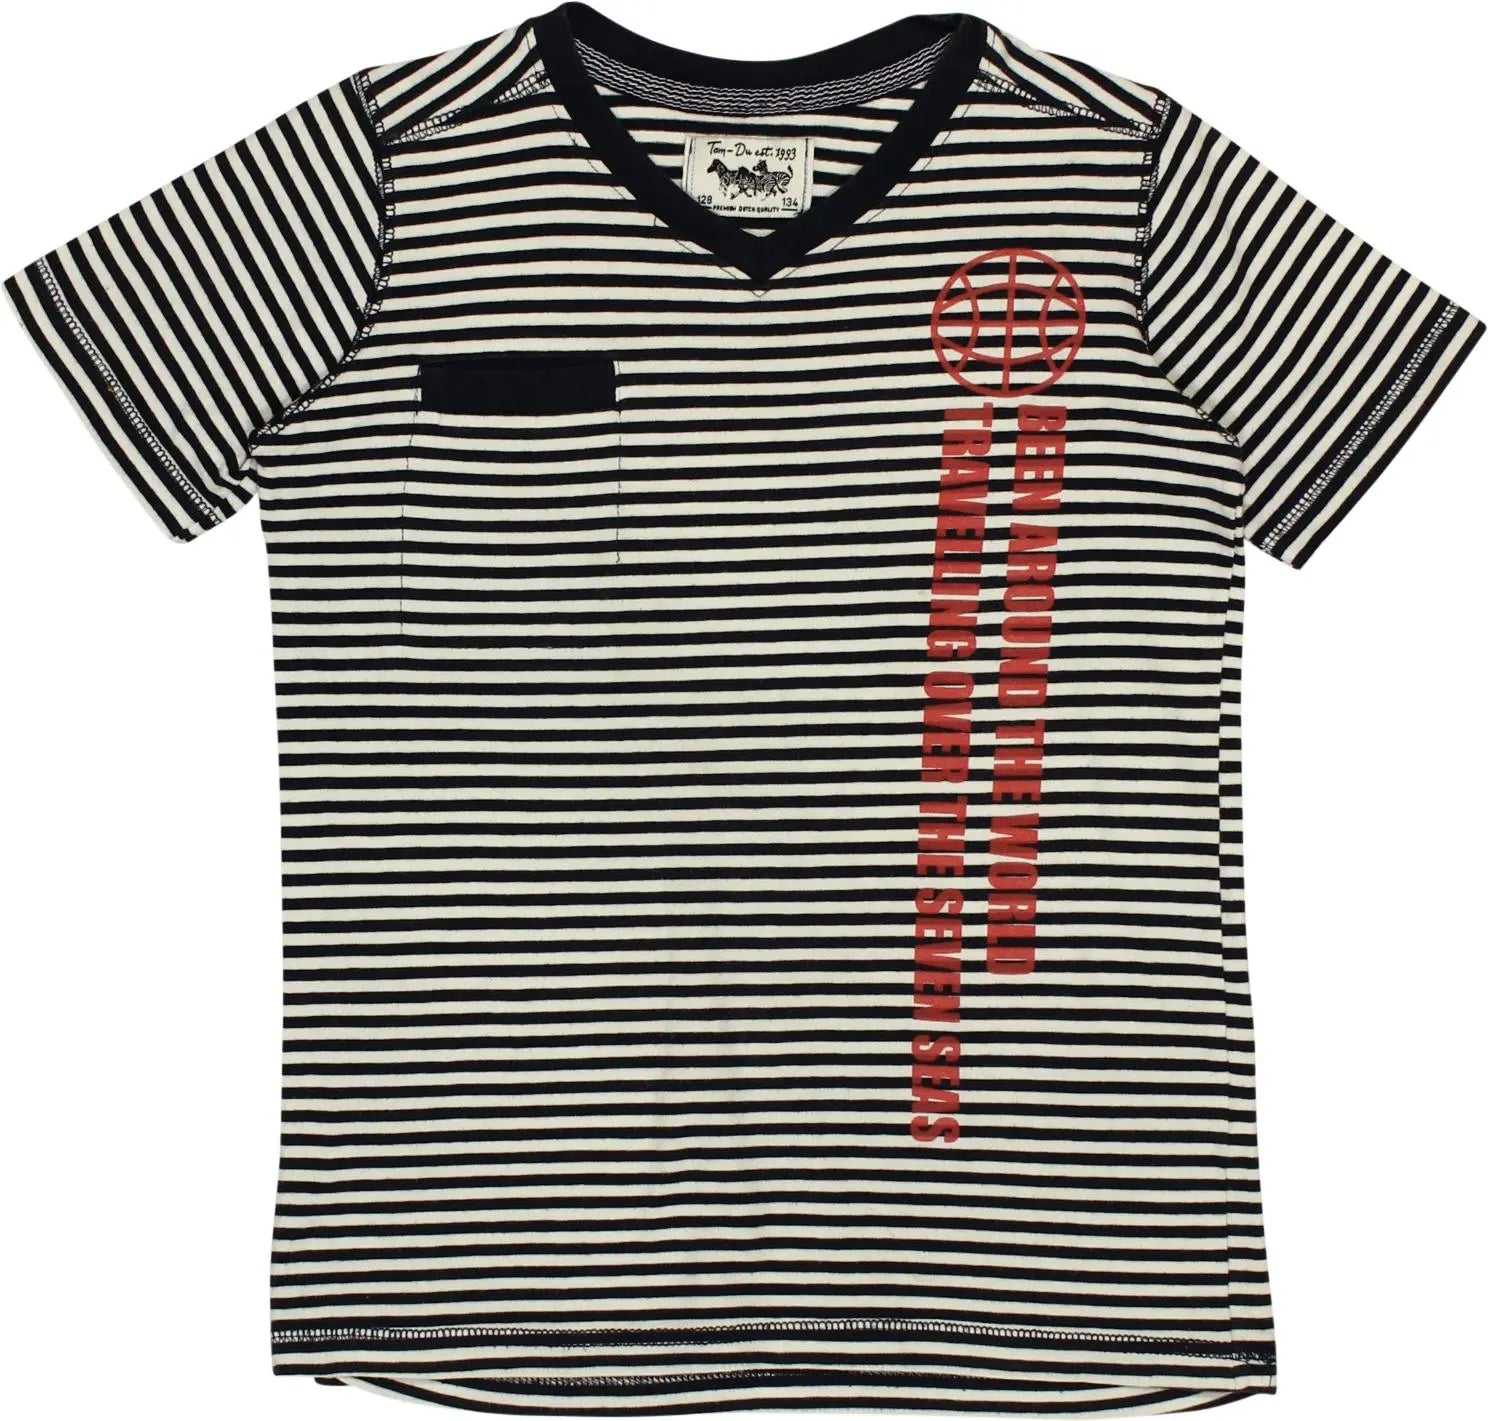 Tom-Du - Blue Striped T-shirt- ThriftTale.com - Vintage and second handclothing